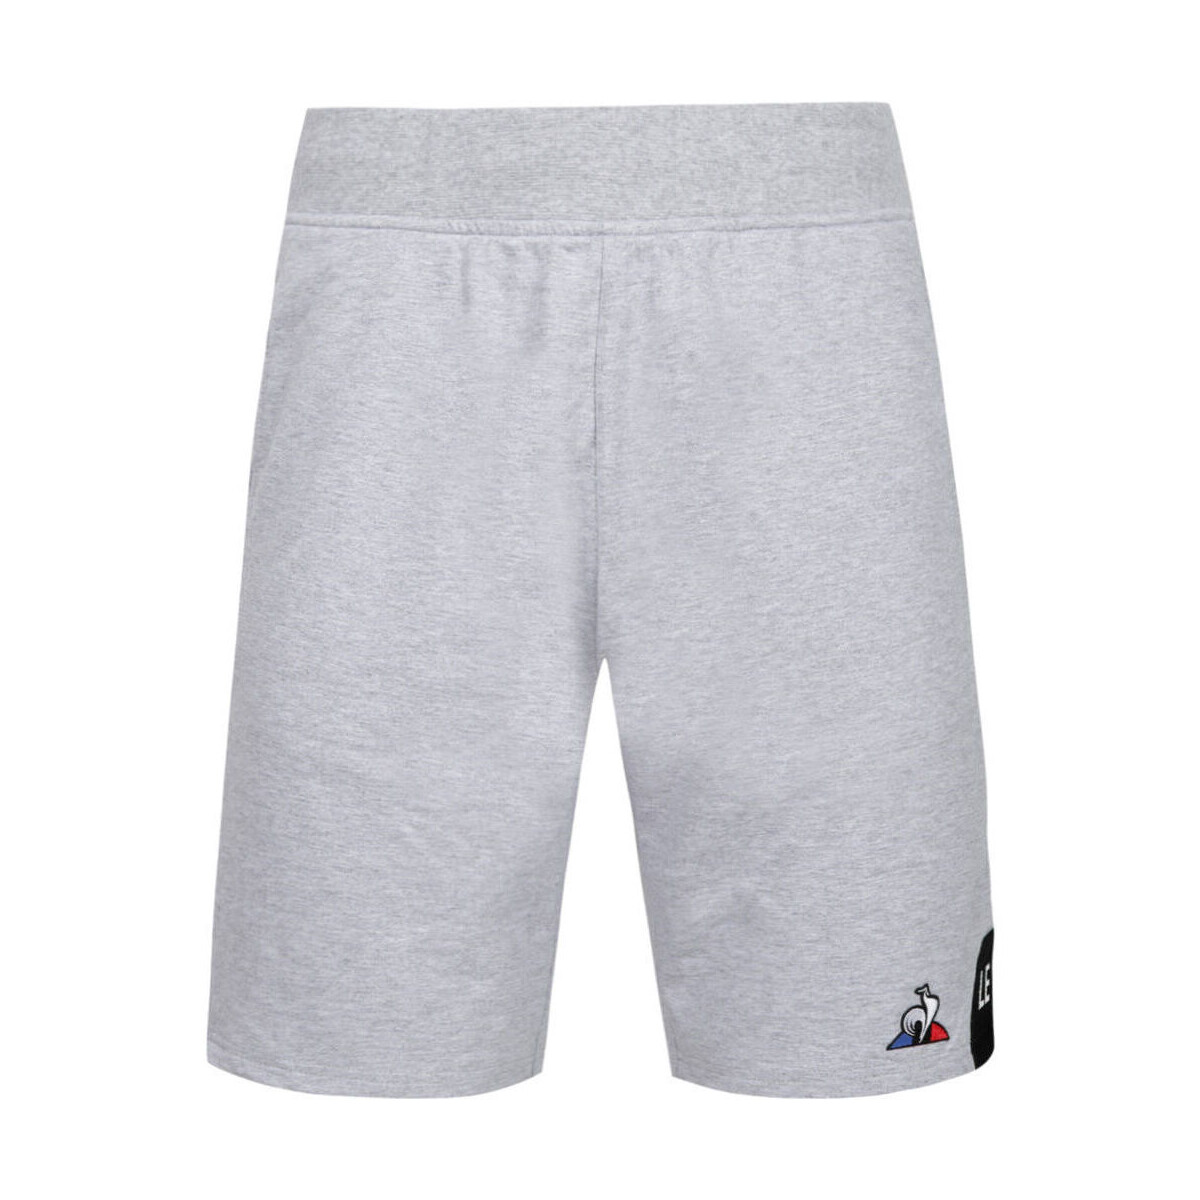 textil Hombre Shorts / Bermudas Le Coq Sportif ESS Short Regular N2 M Gris